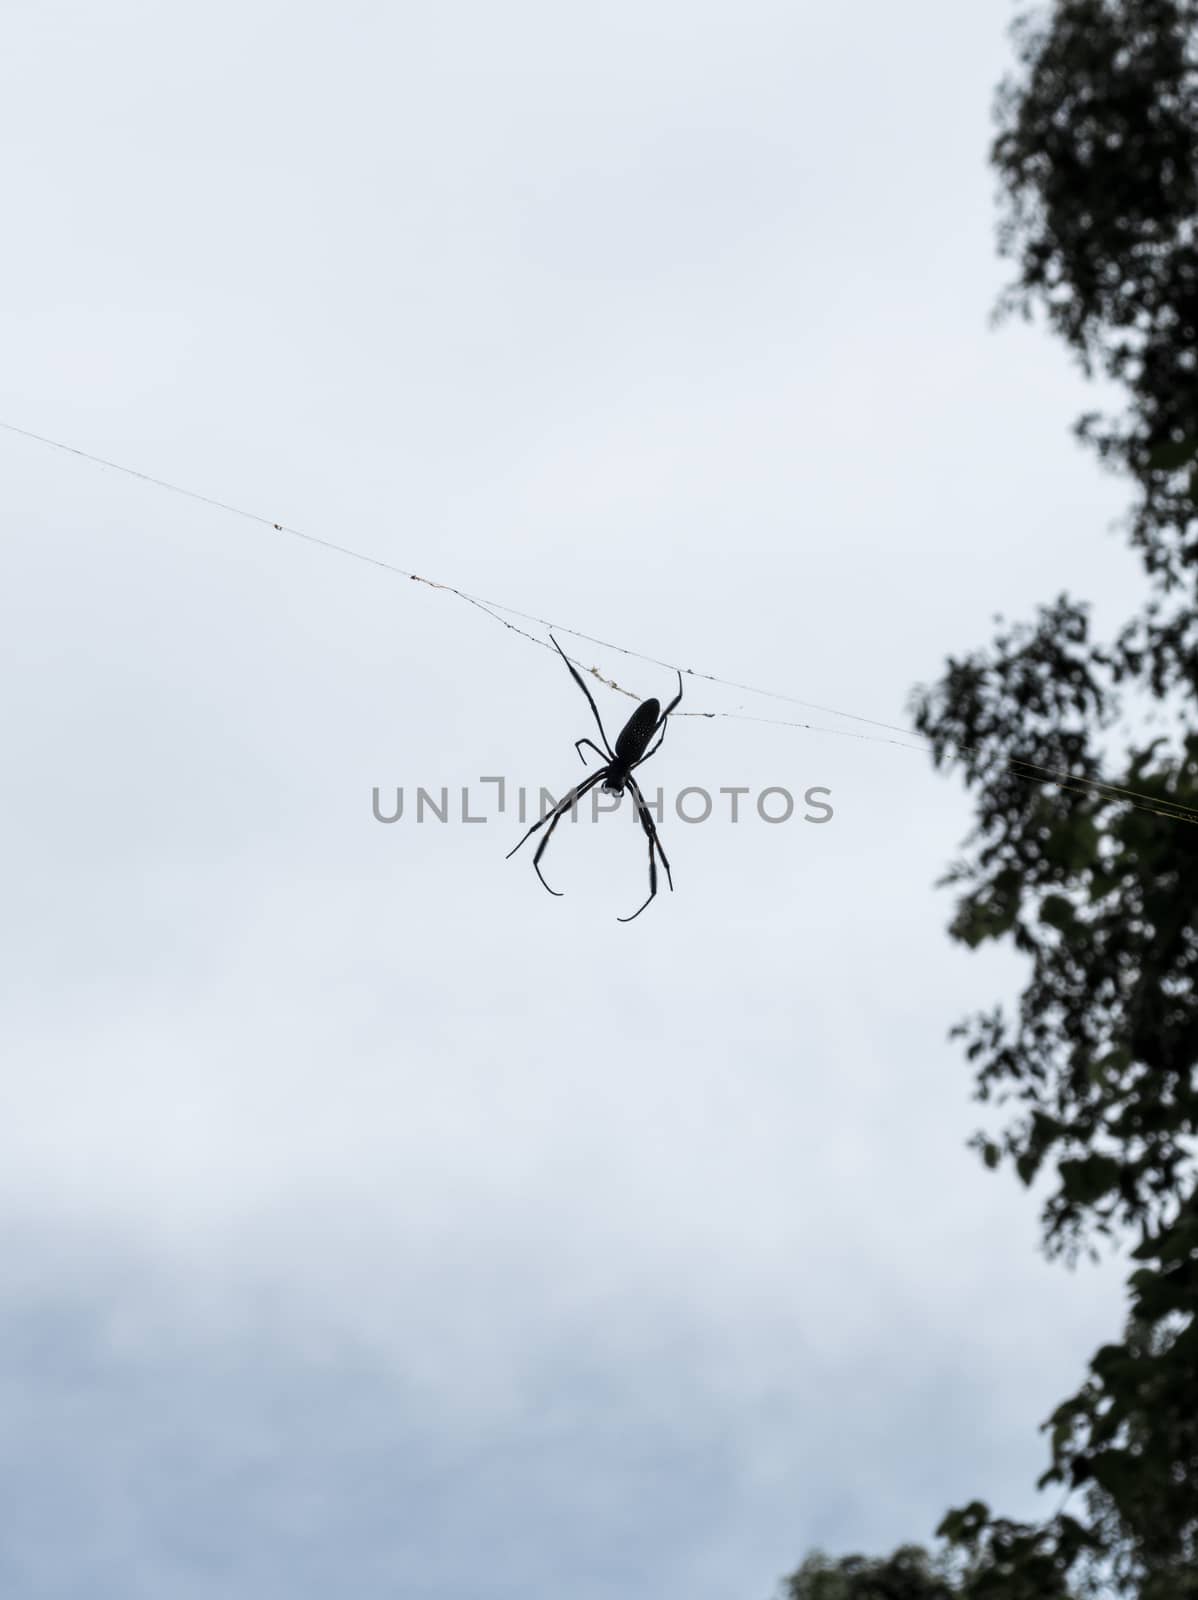 Spider in iguazu falls forest by daboost